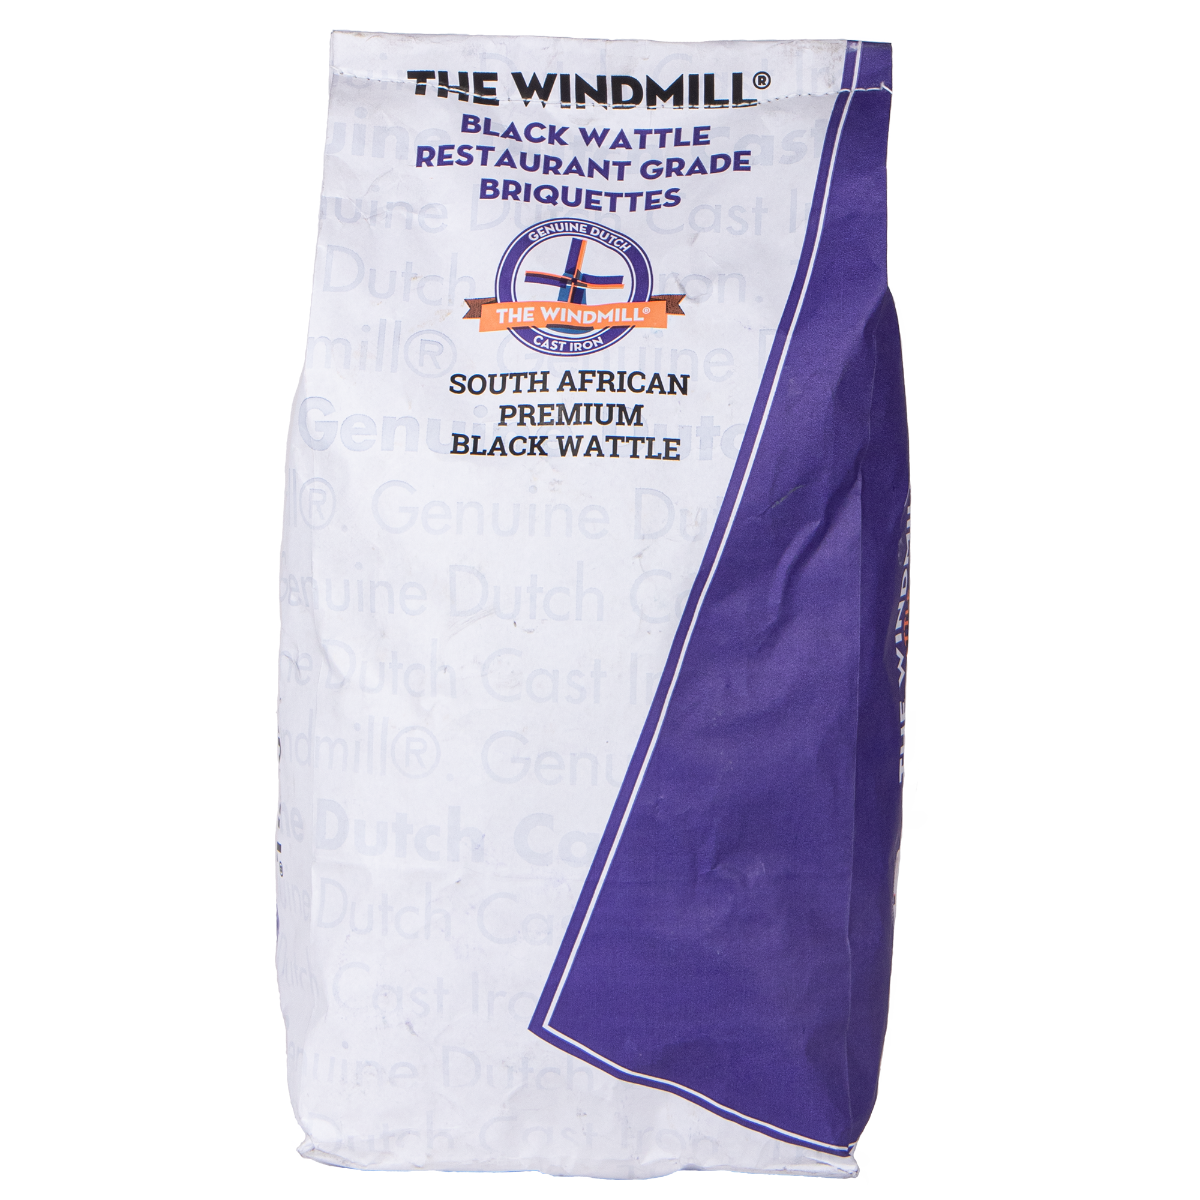 The Windmill Premium South African Black Wattle Briquettes